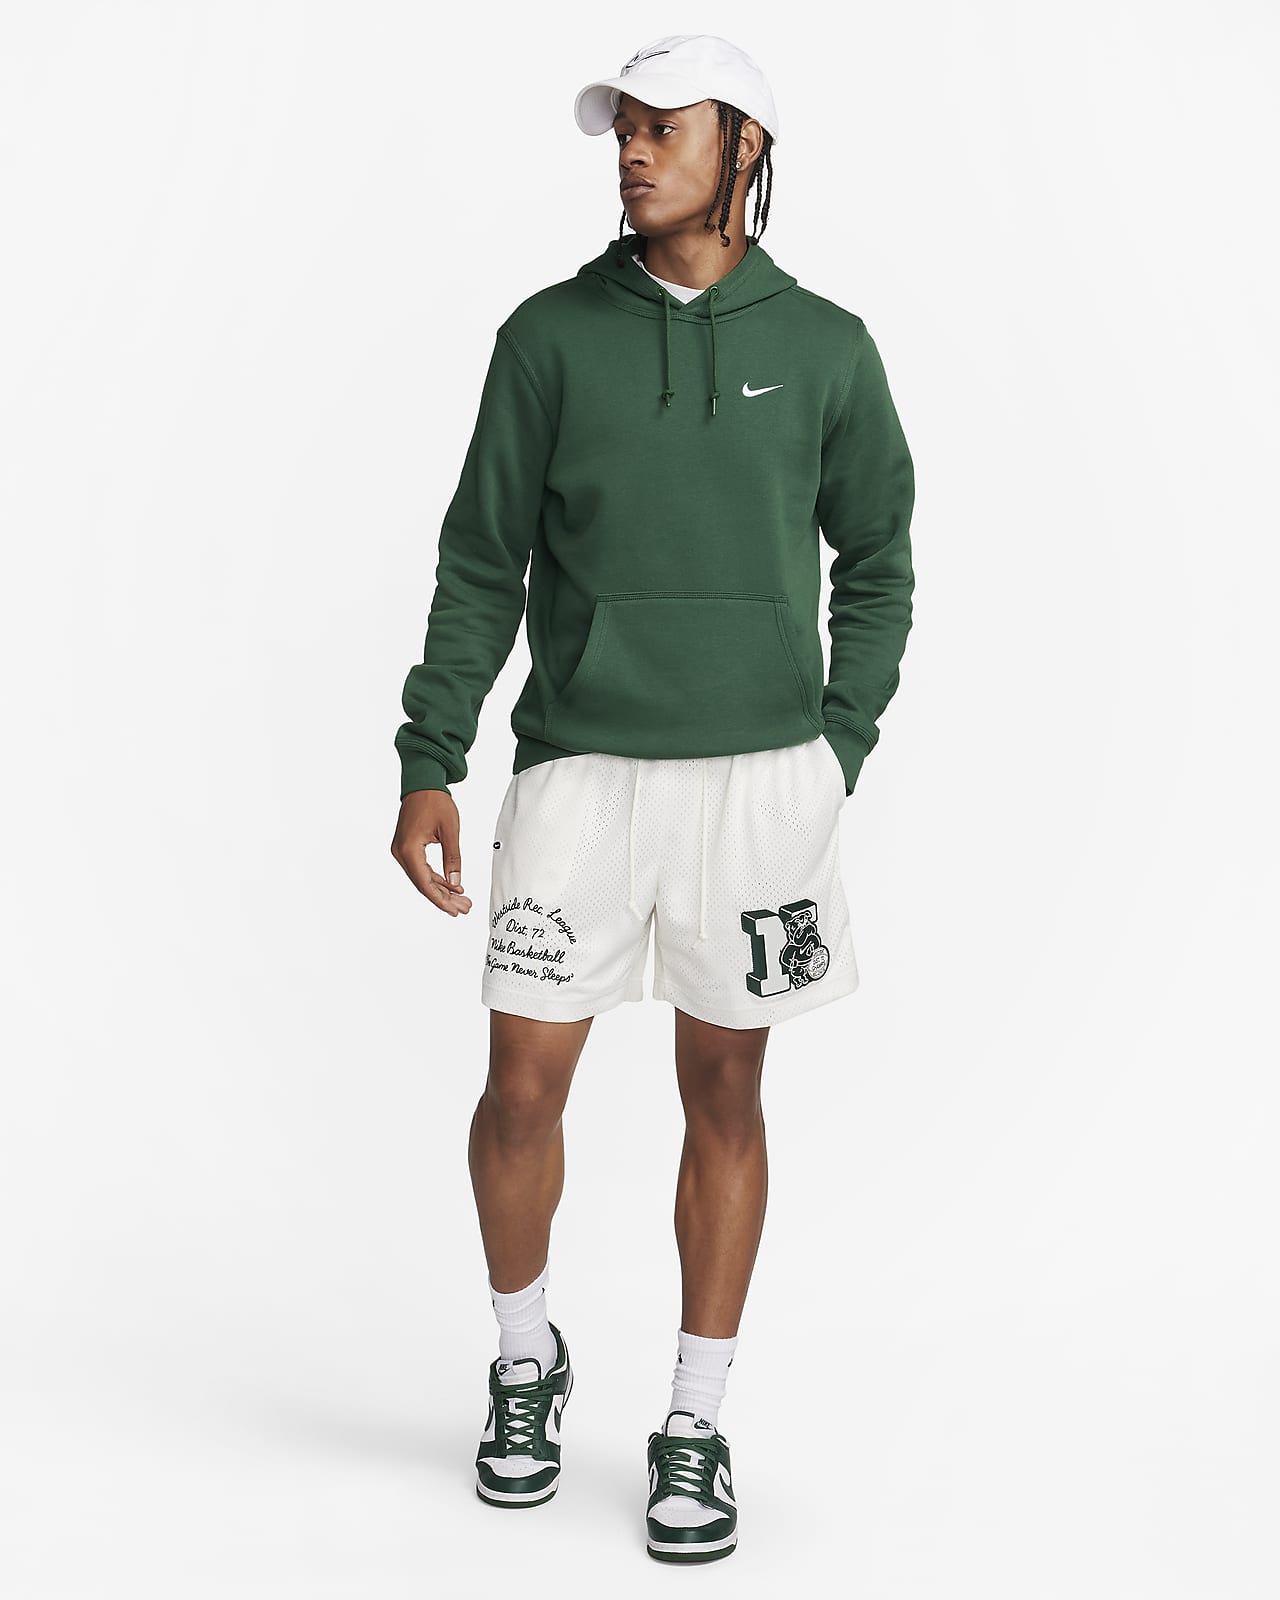 Mesh Nike Shorts. Men\'s Authentics